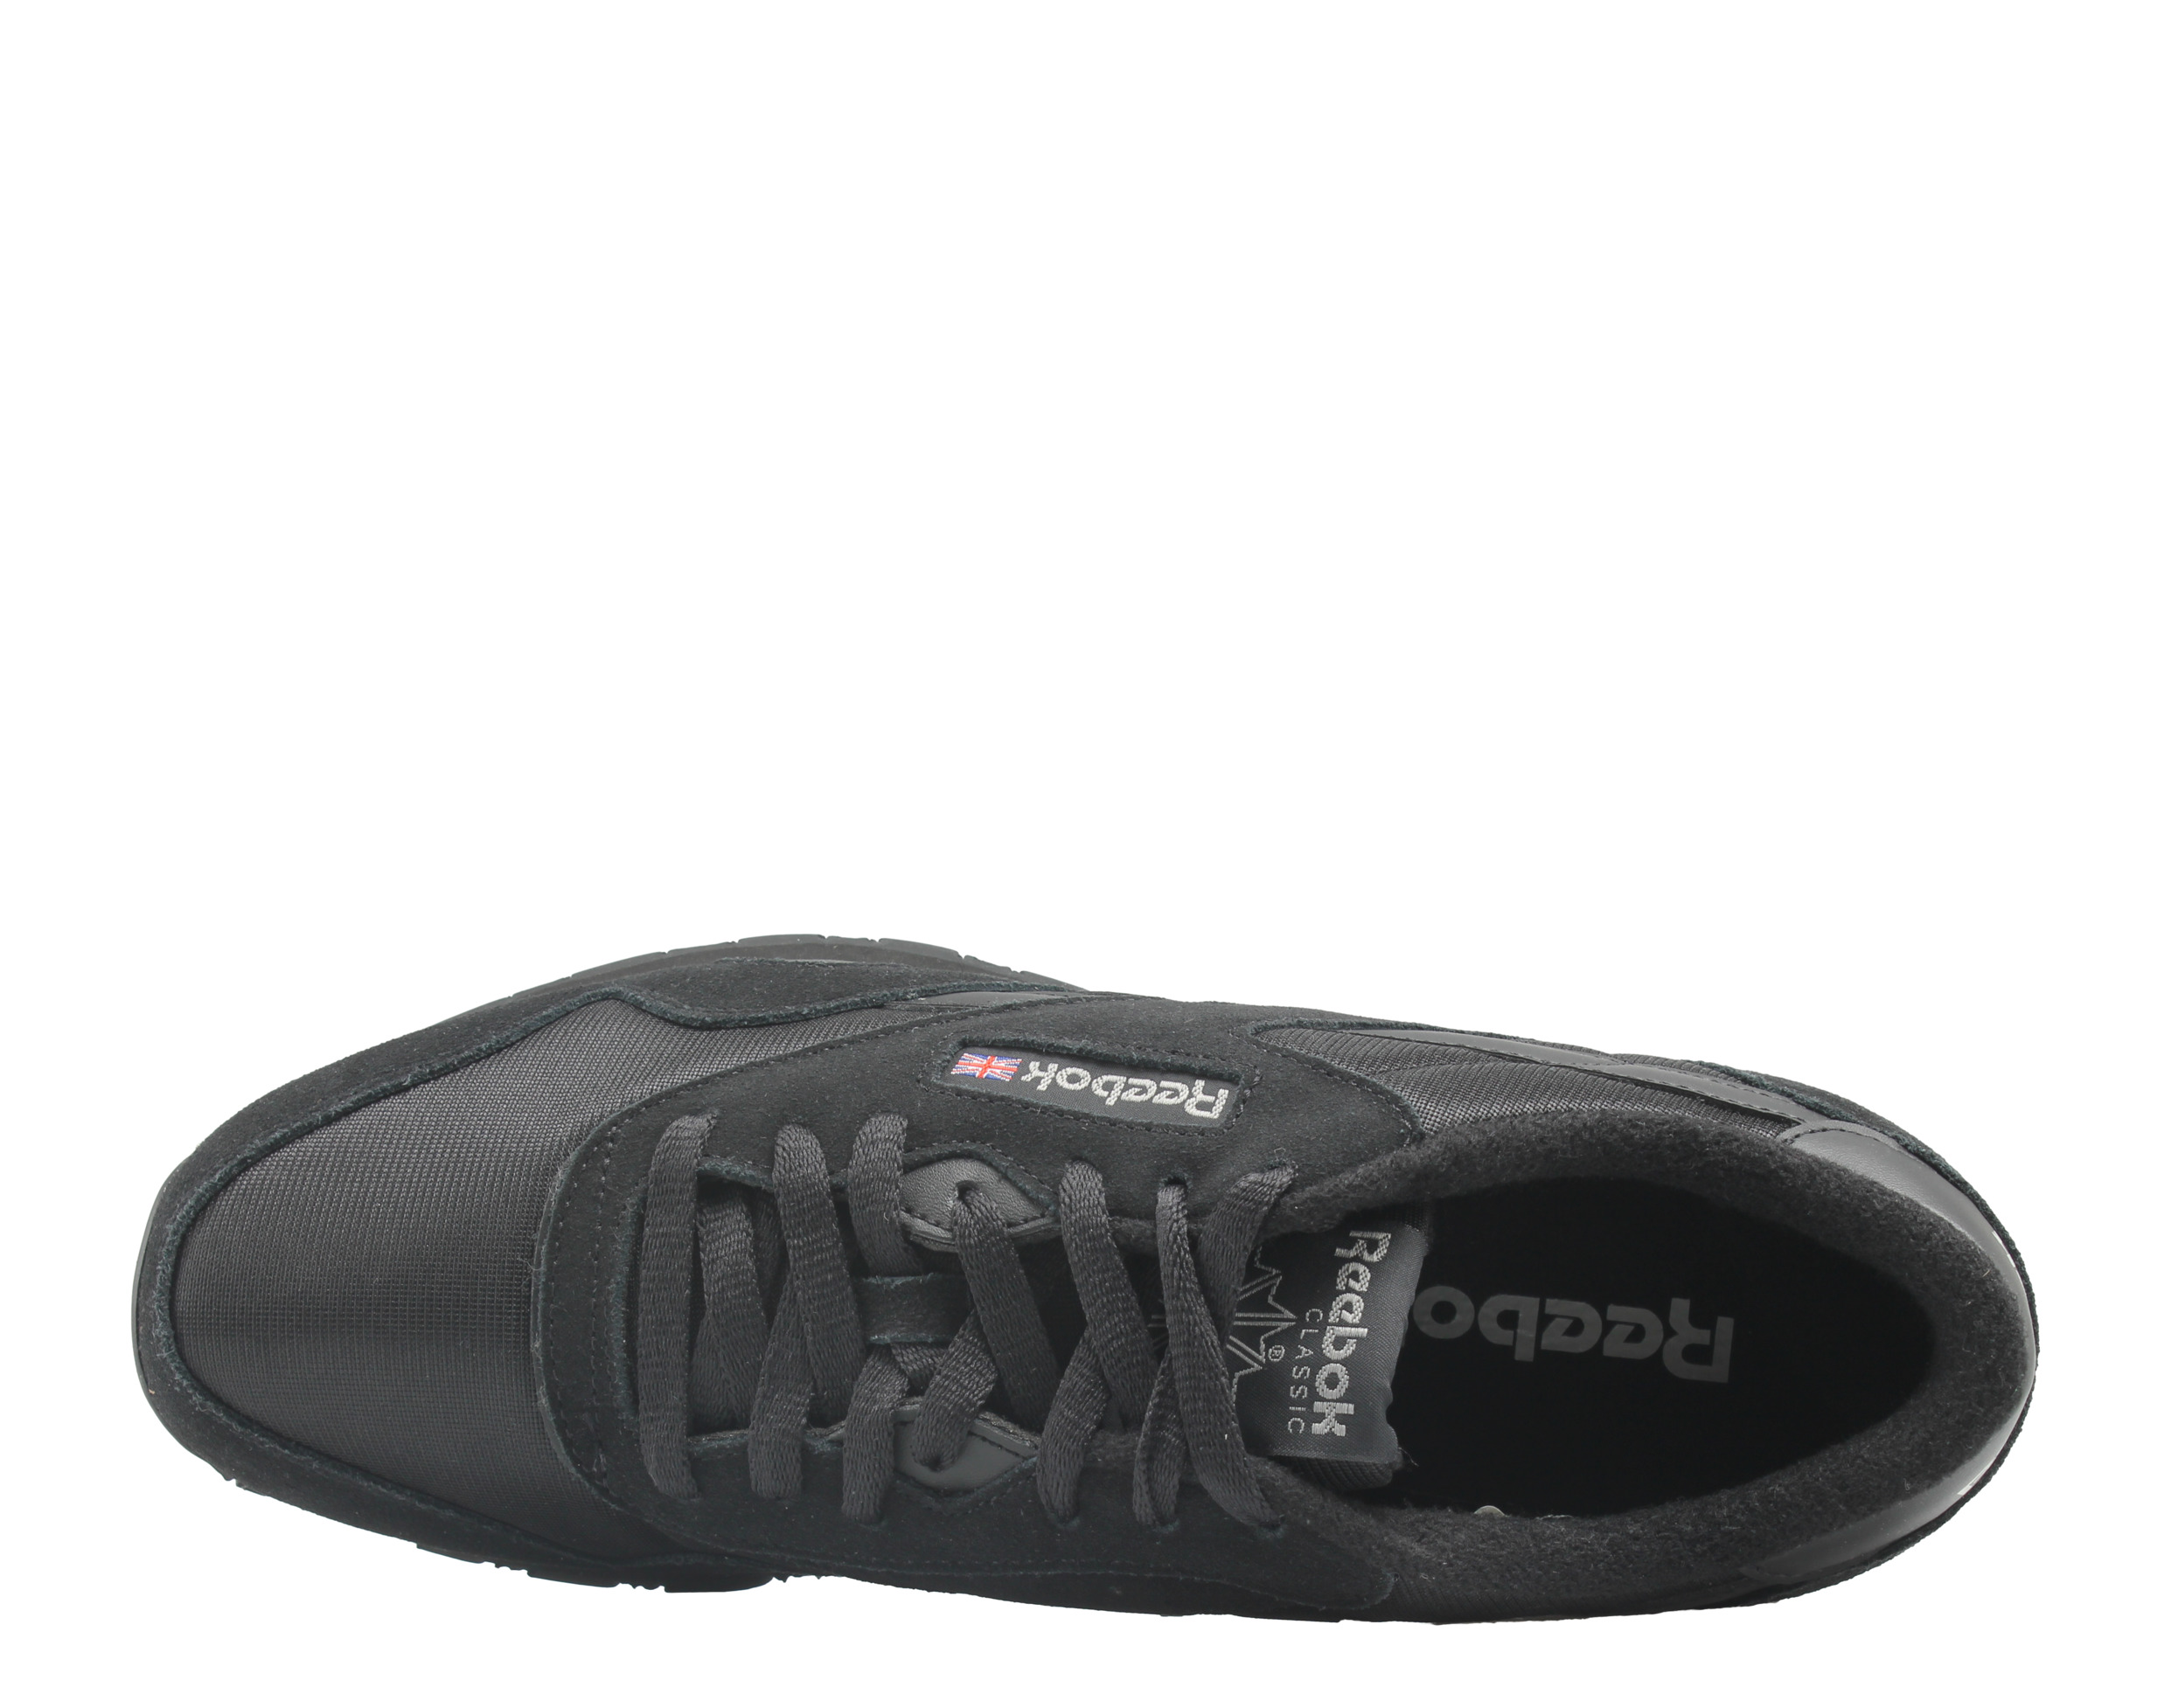 Reebok Classic Nylon Men's Running Shoes Size 9 - image 4 of 6